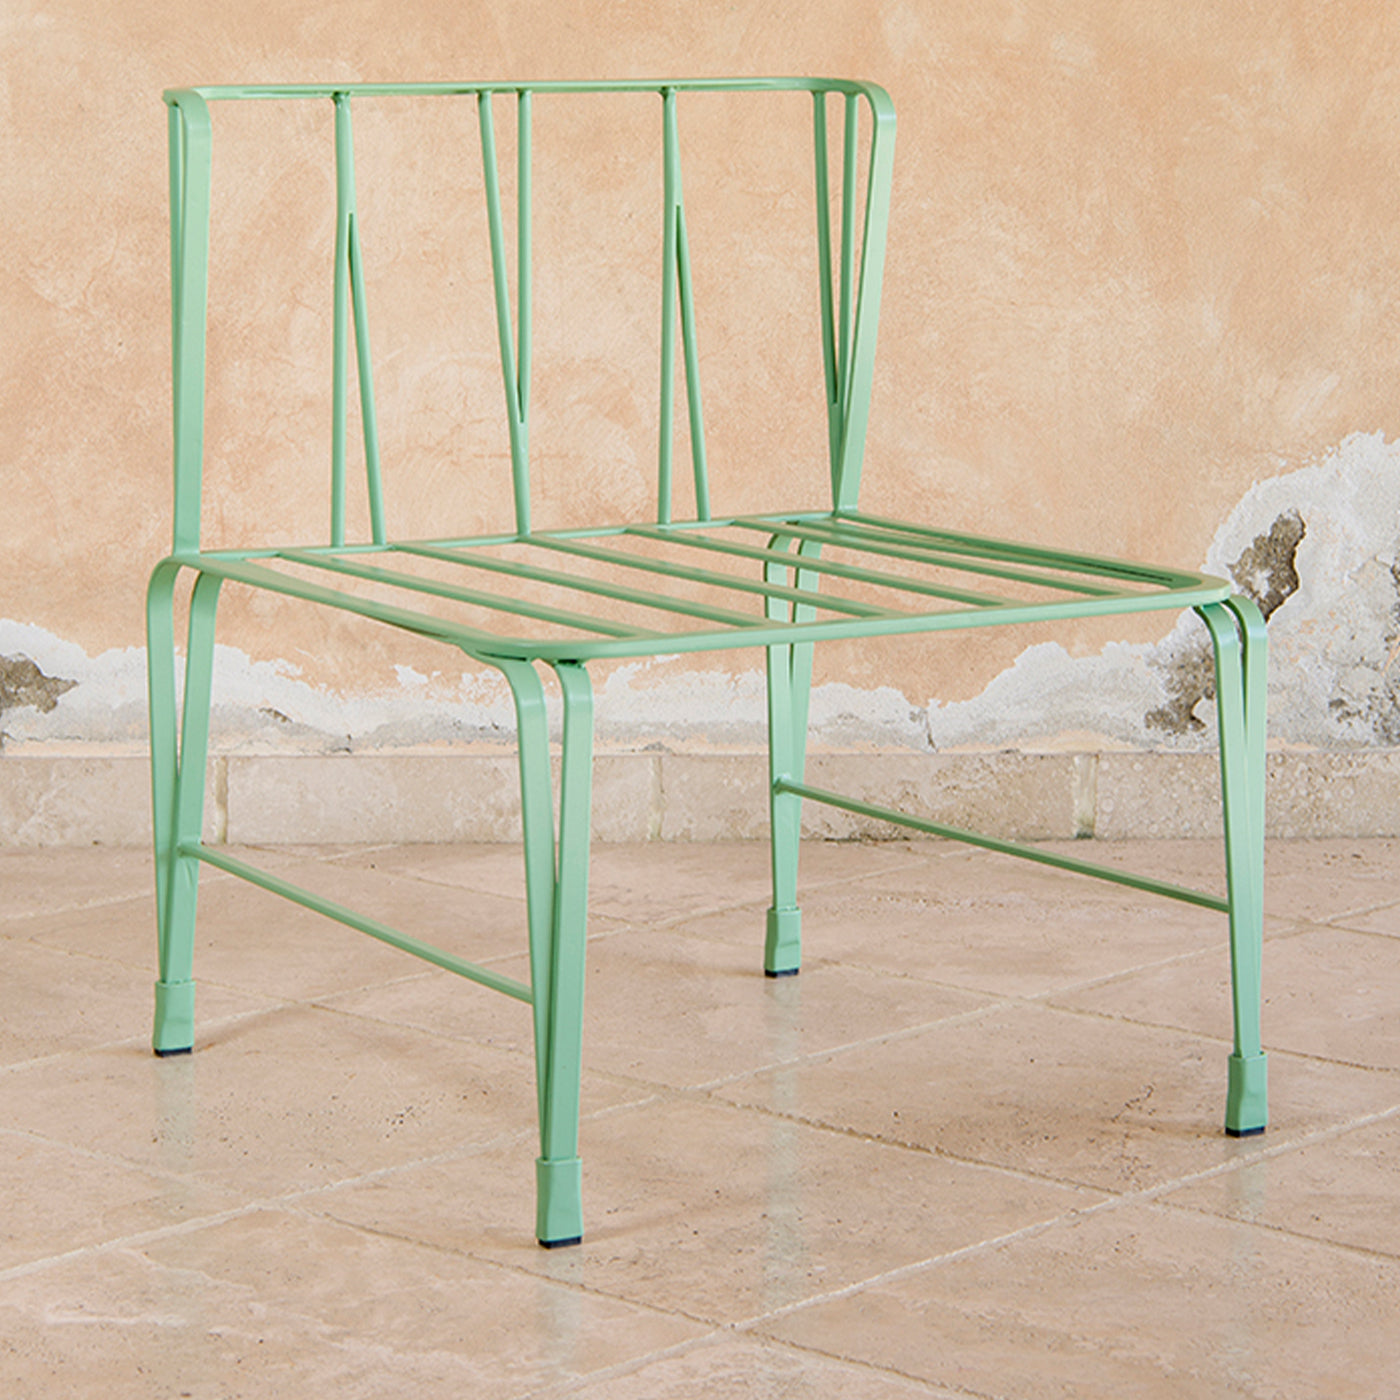 Marina Black Chair by Ciarmoli Queda Studio - Alternative view 2